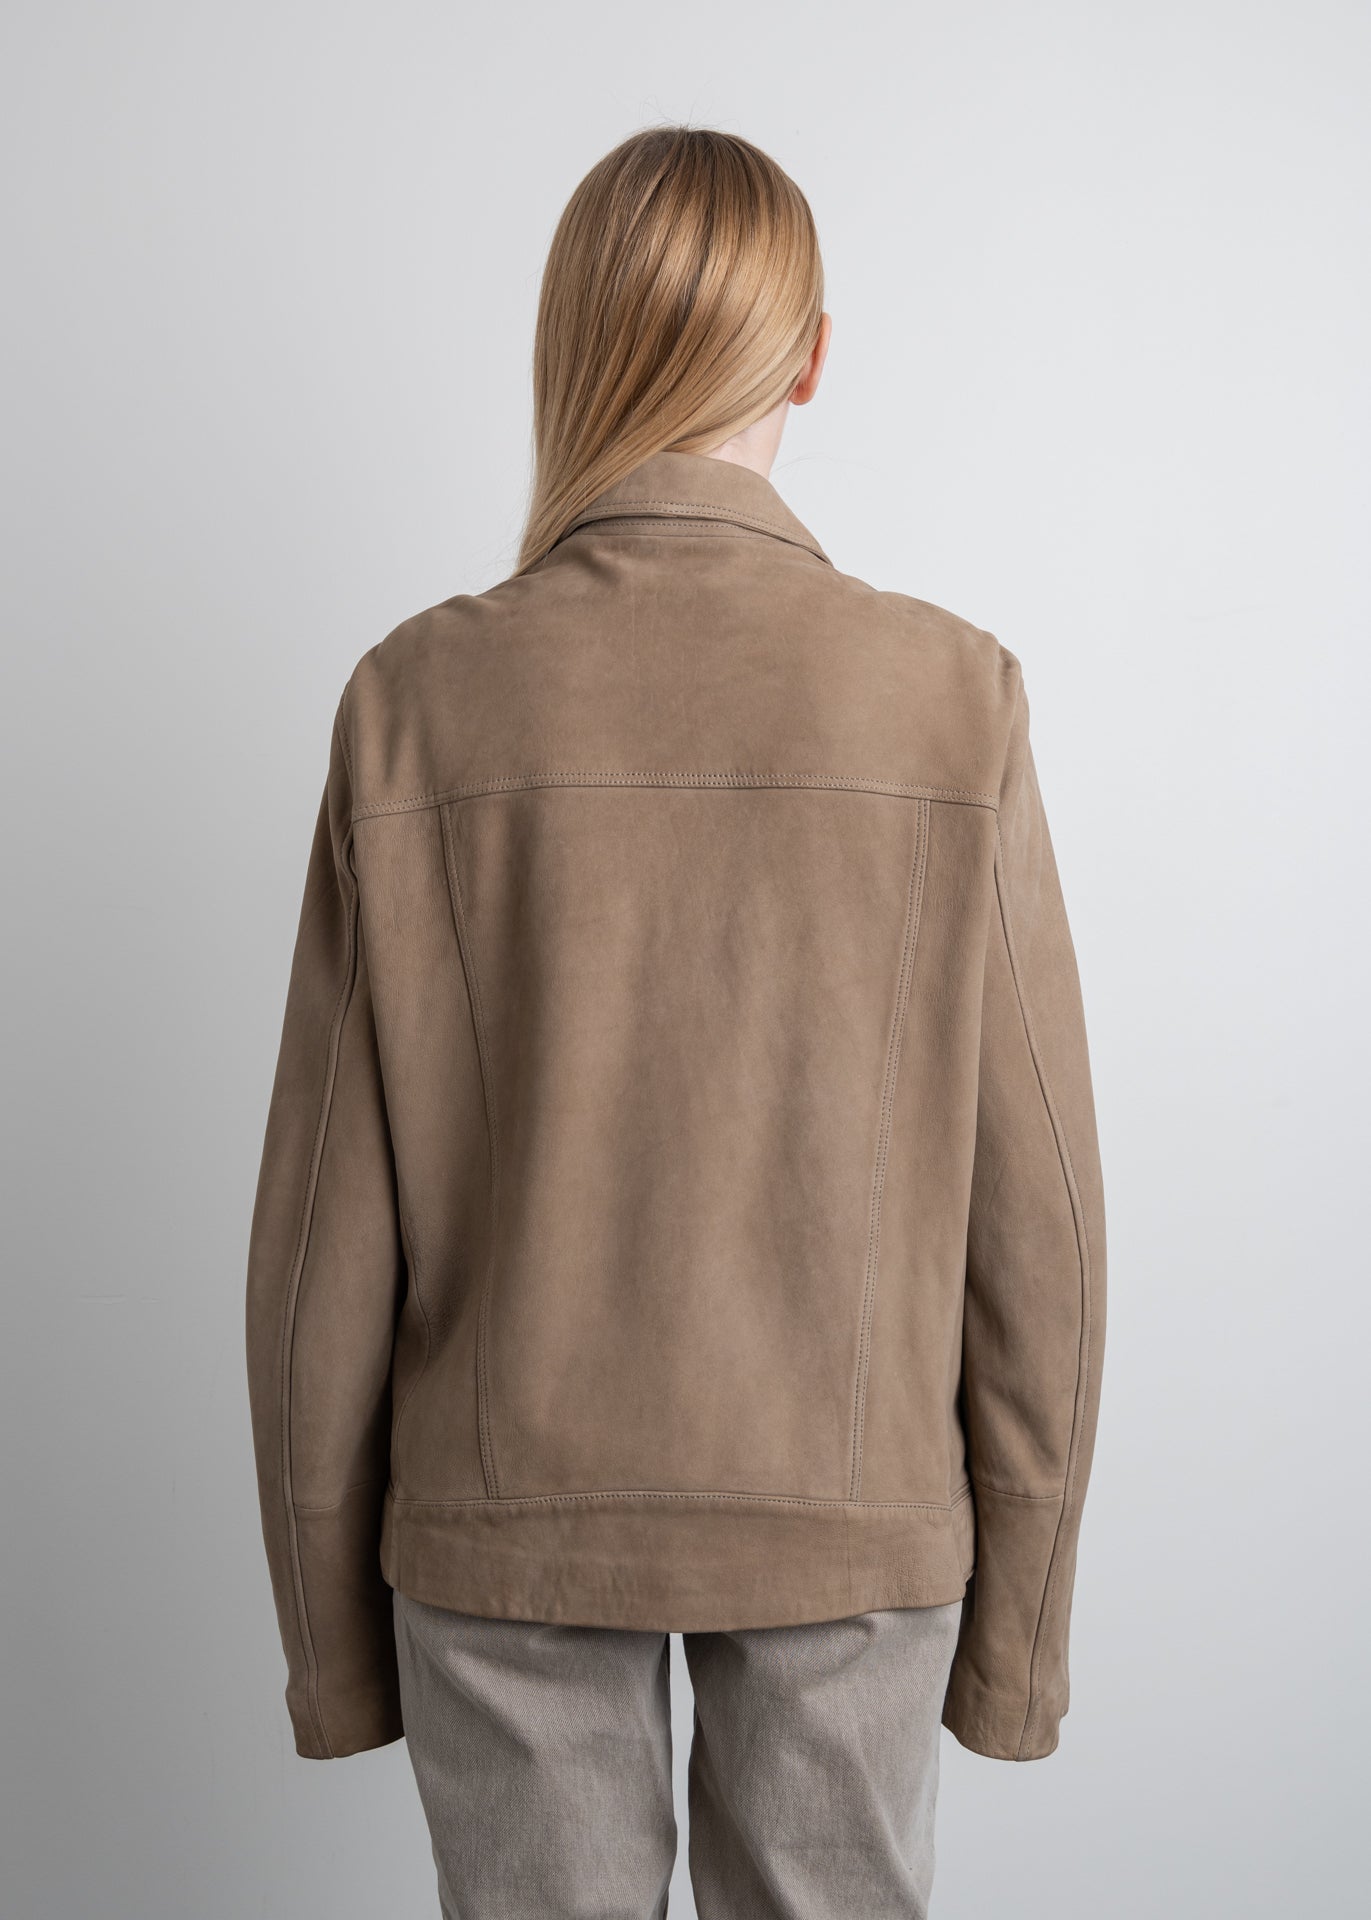 ALL SAINTS Vintage Brown Oversized Suede Jacket